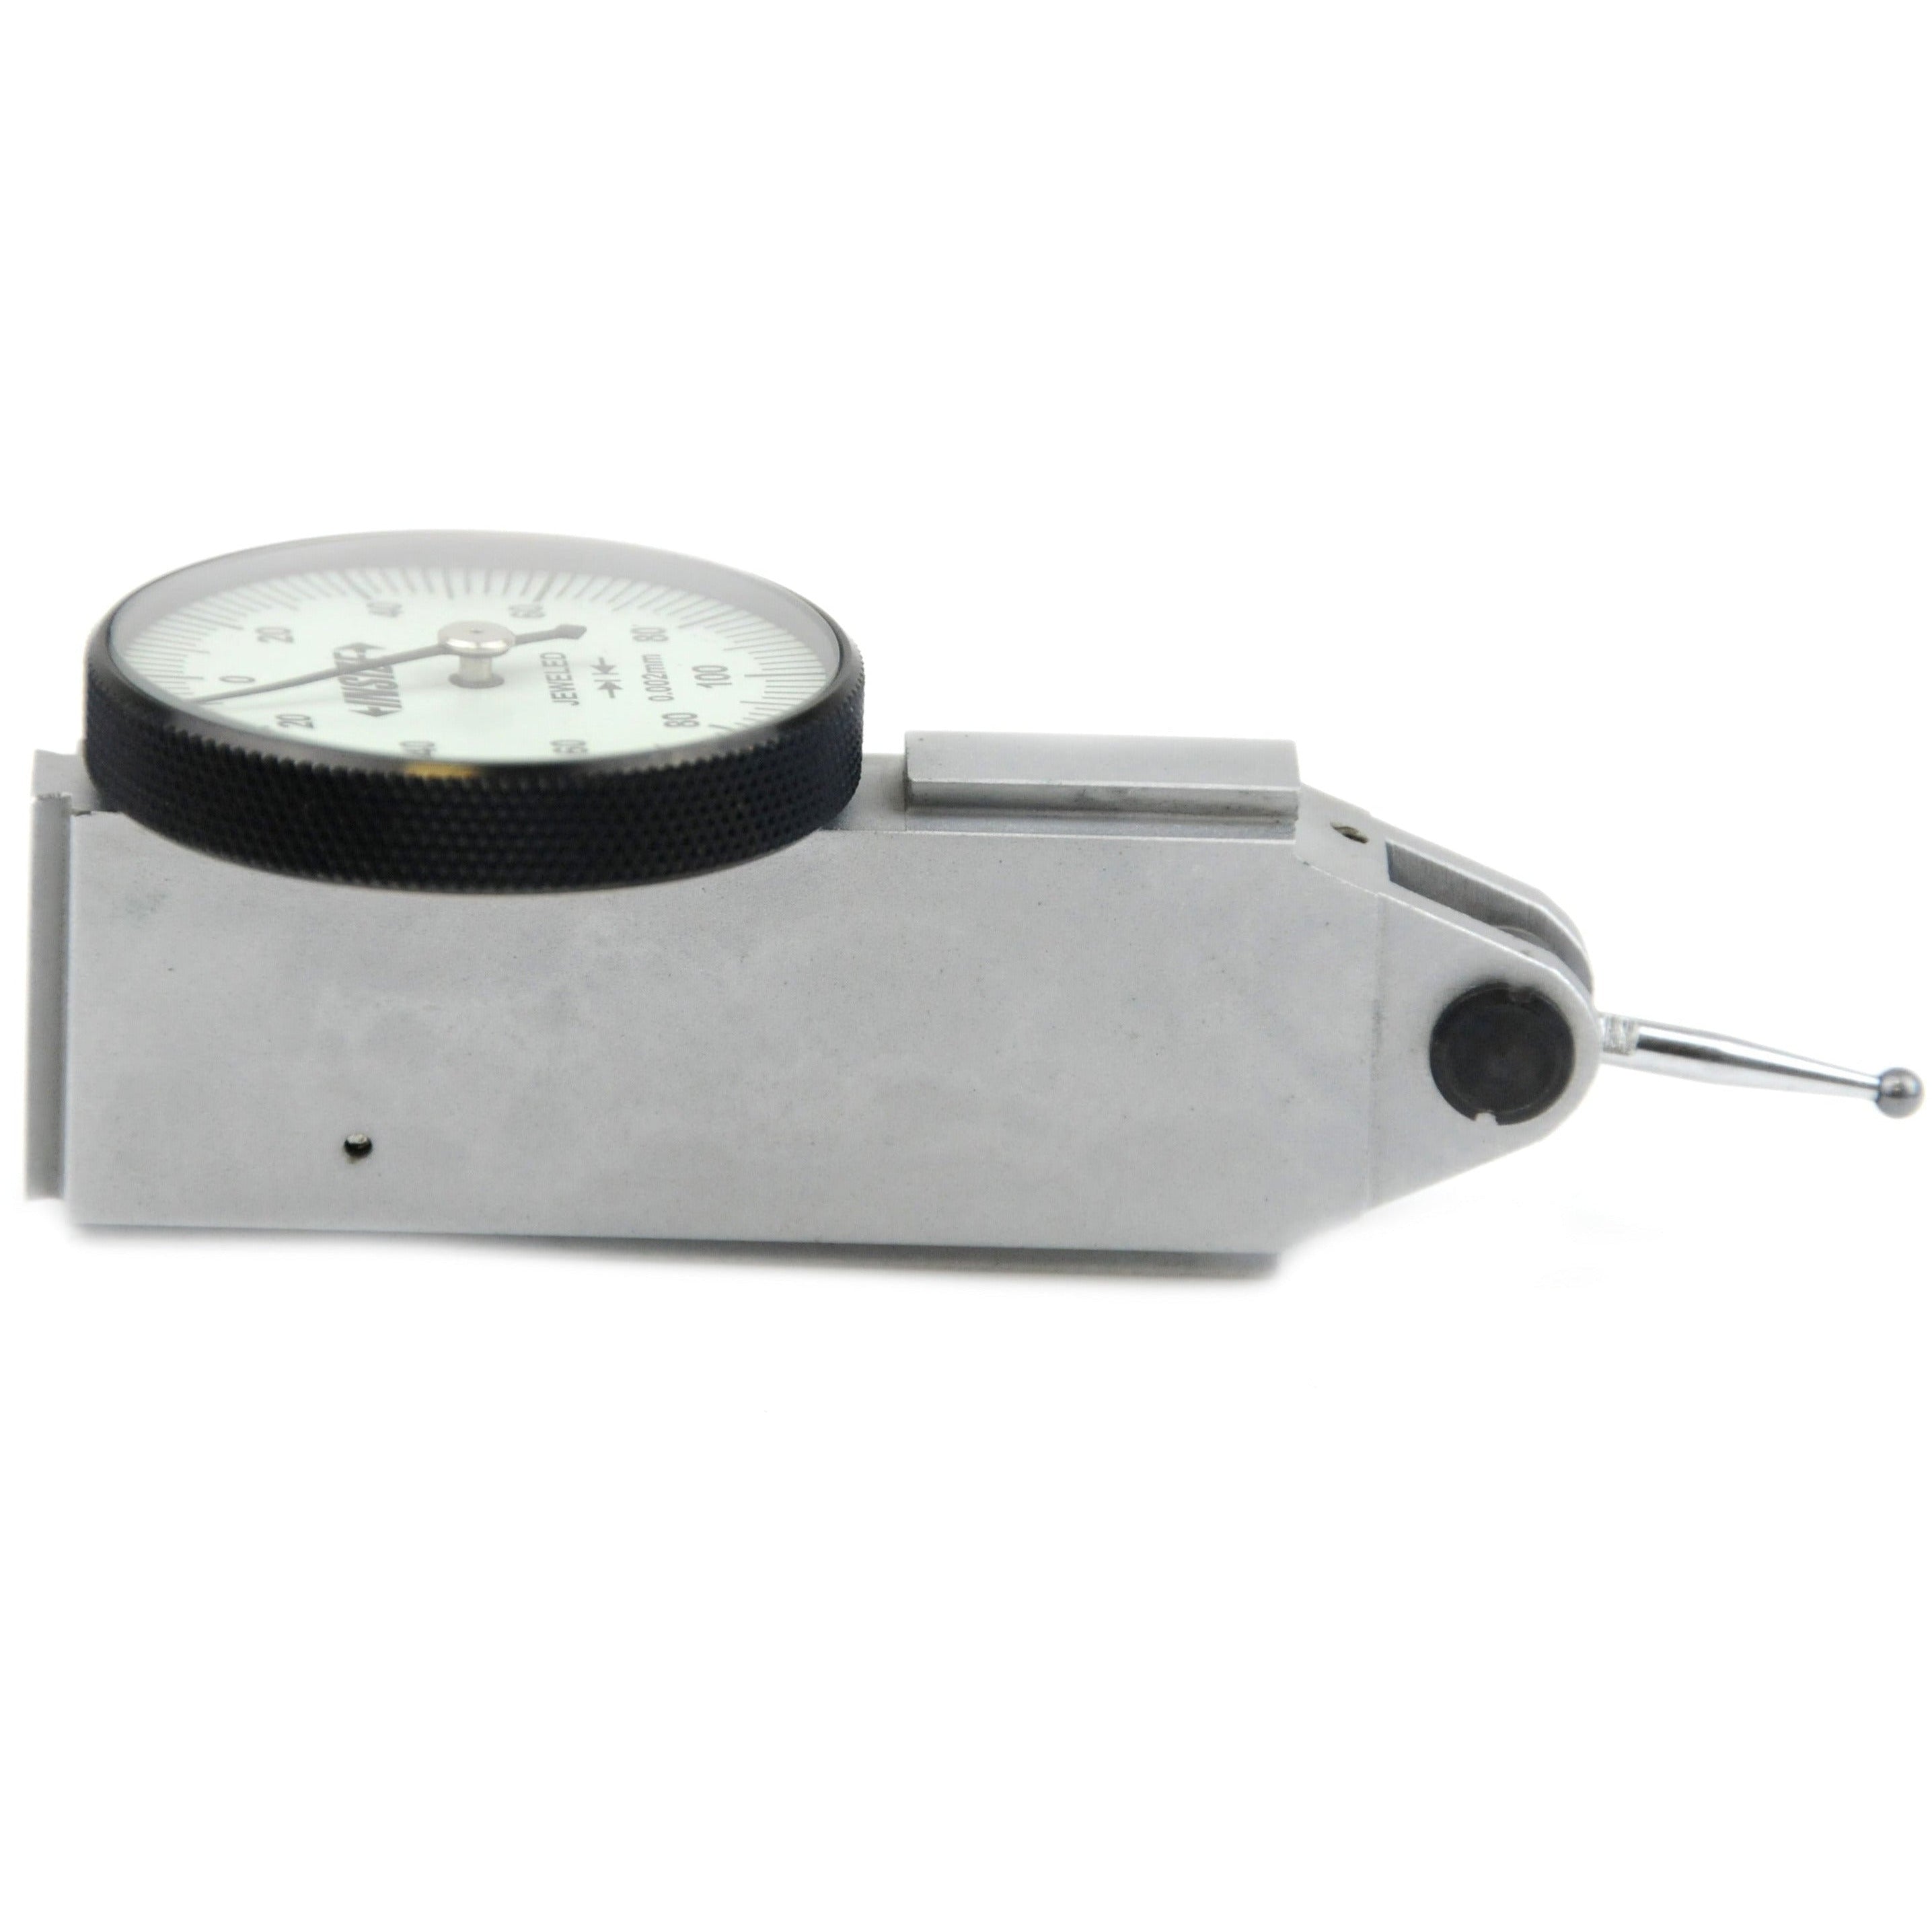 Insize Metric Dial Indicator 0.2 mm Range Series 2380-02